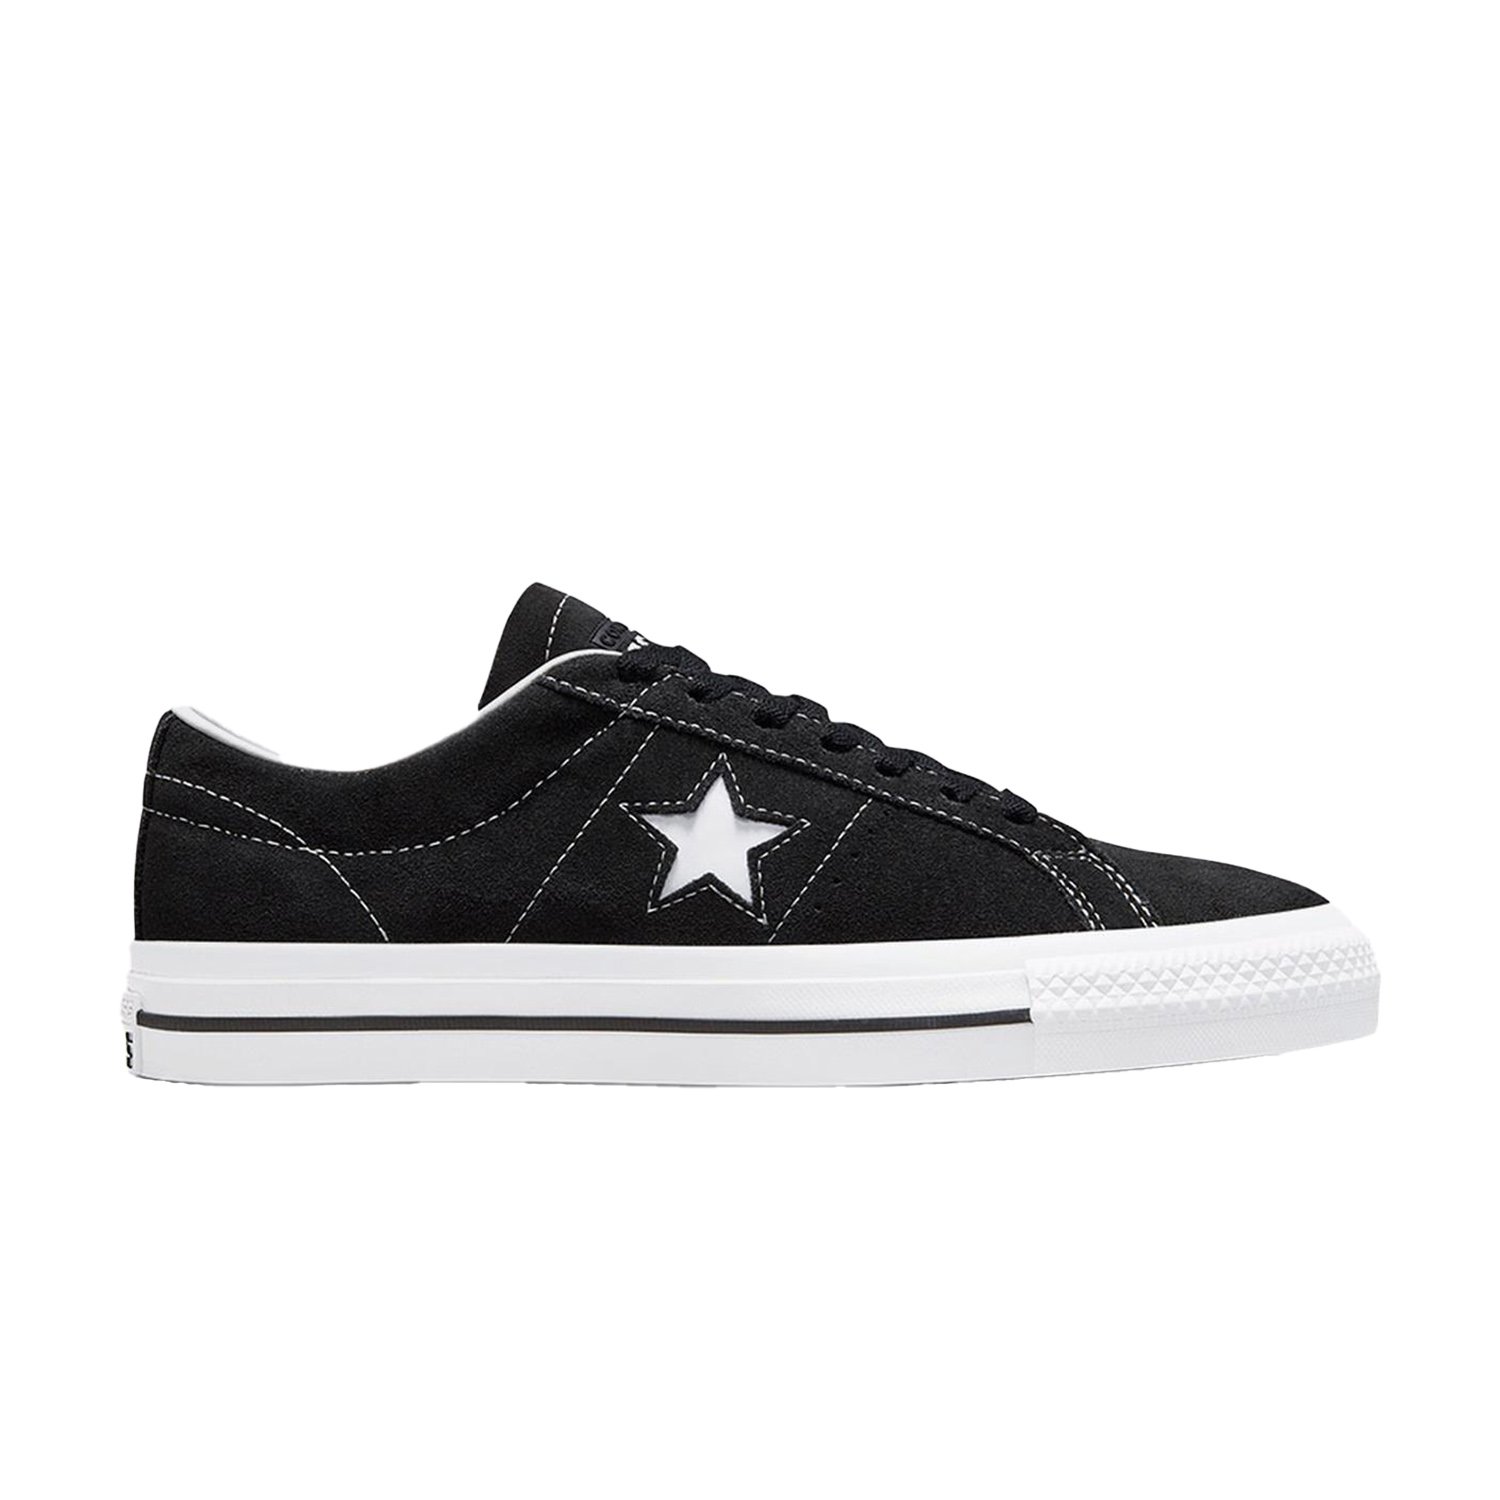 Converse Cons One Star Pro Suede Ayakkabı - Siyah - 1